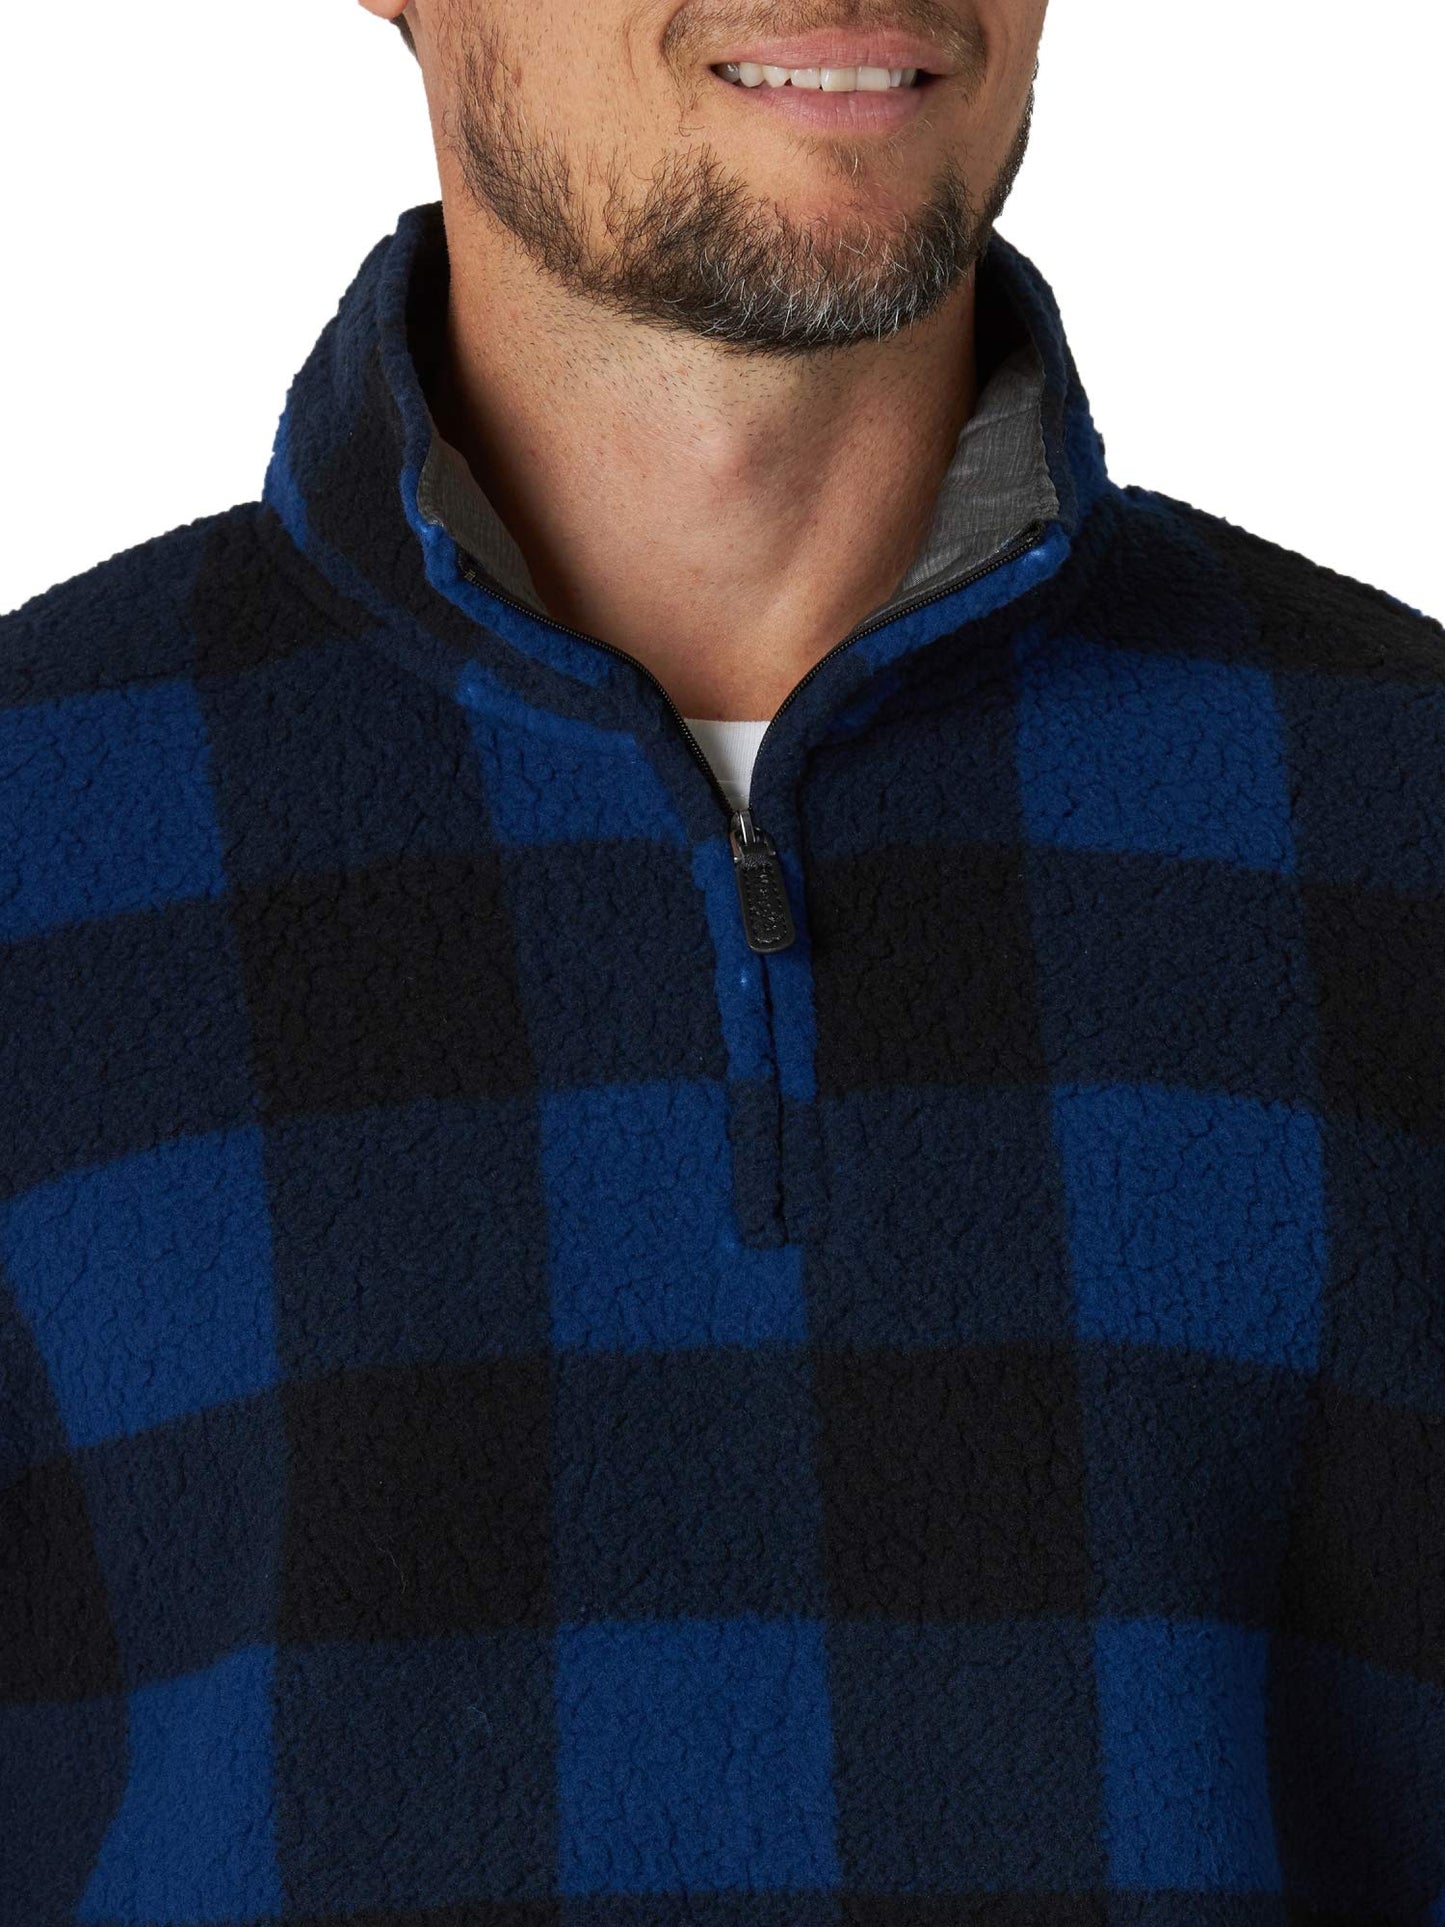 Wrangler Authentics Men's Wooly Fleece Quarter-Zip, Blue Buffalo, X-Large